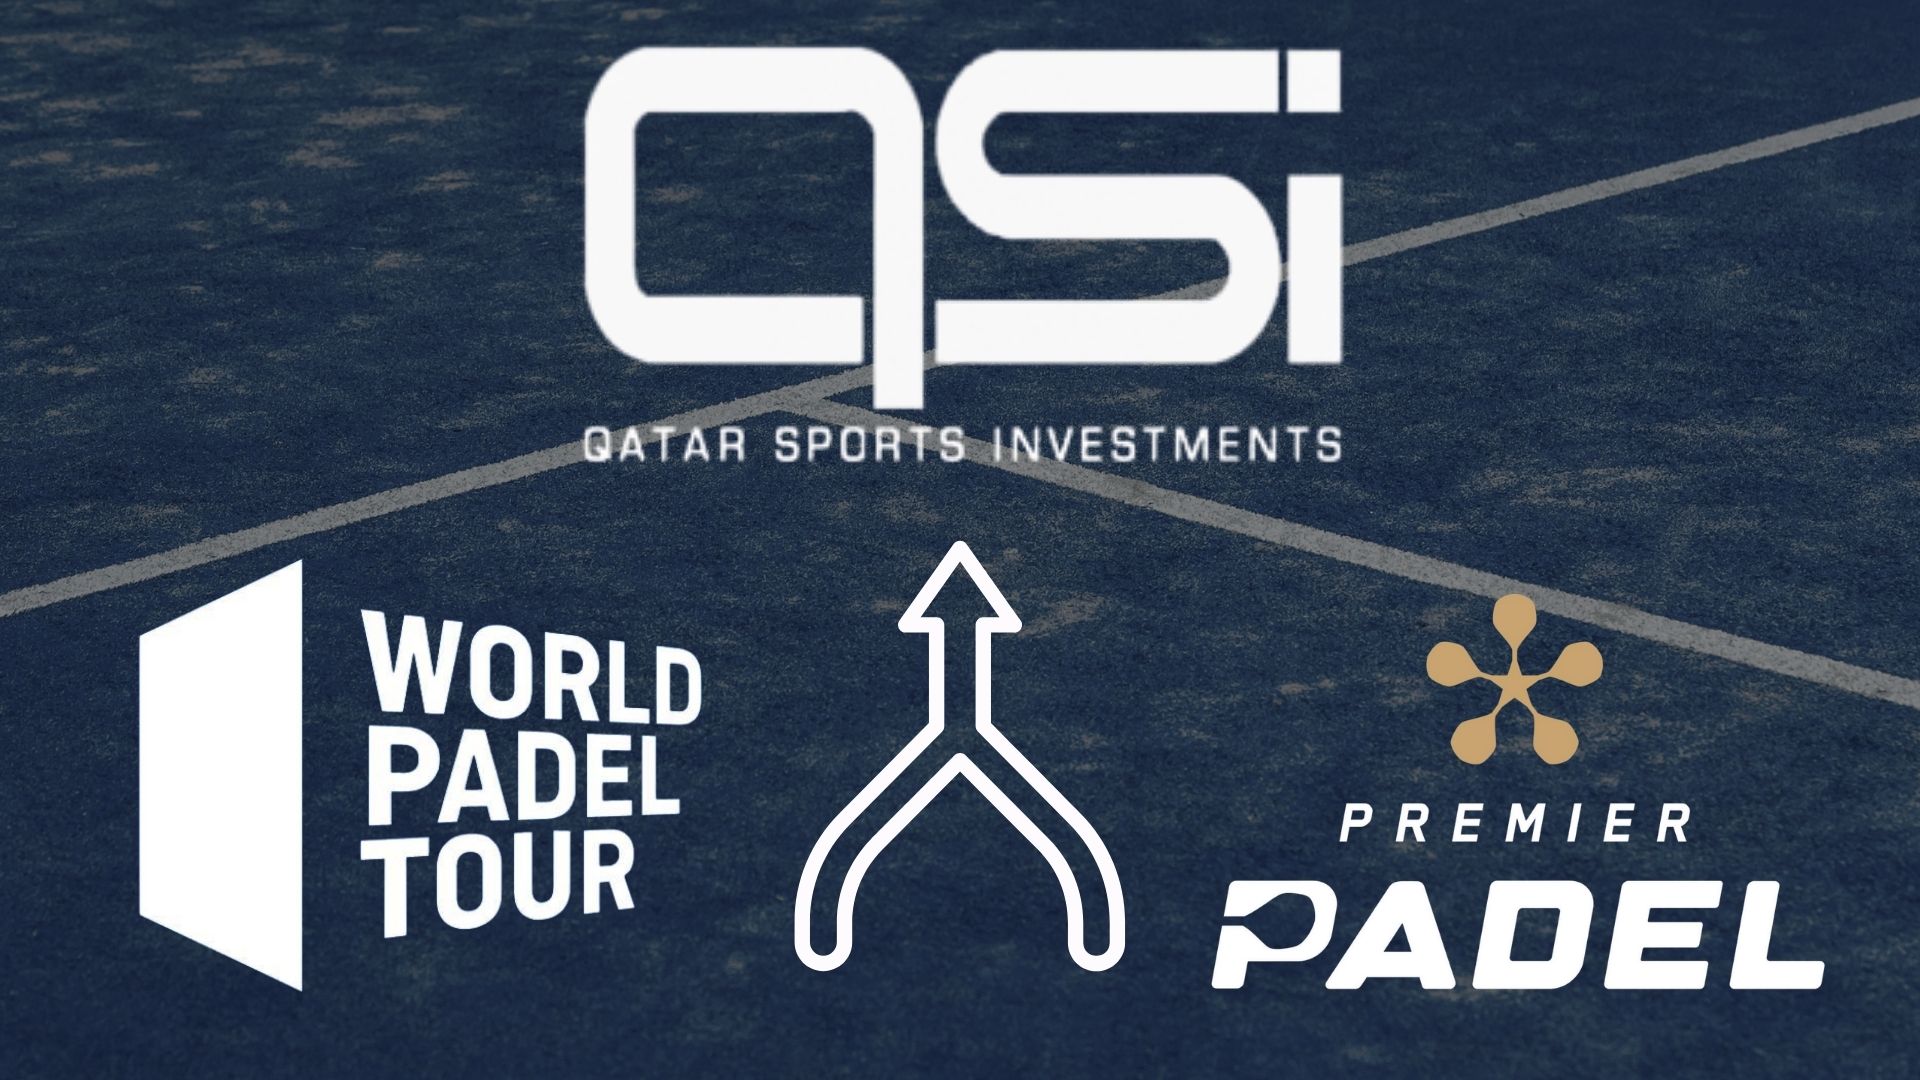 Le World Padel Tour skulle gå med Premier Padel från 2023 på QSI